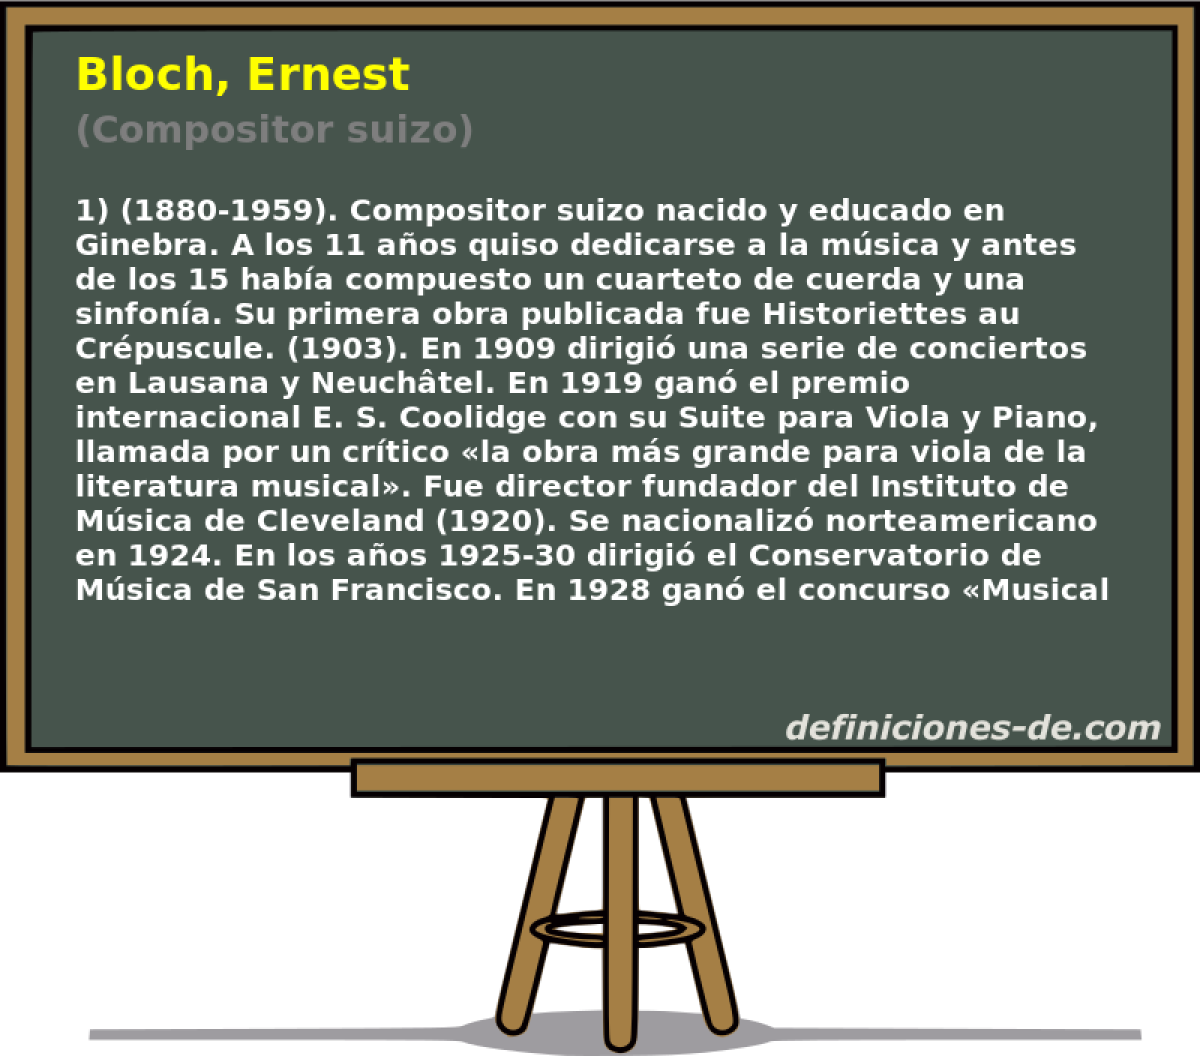 Bloch, Ernest (Compositor suizo)